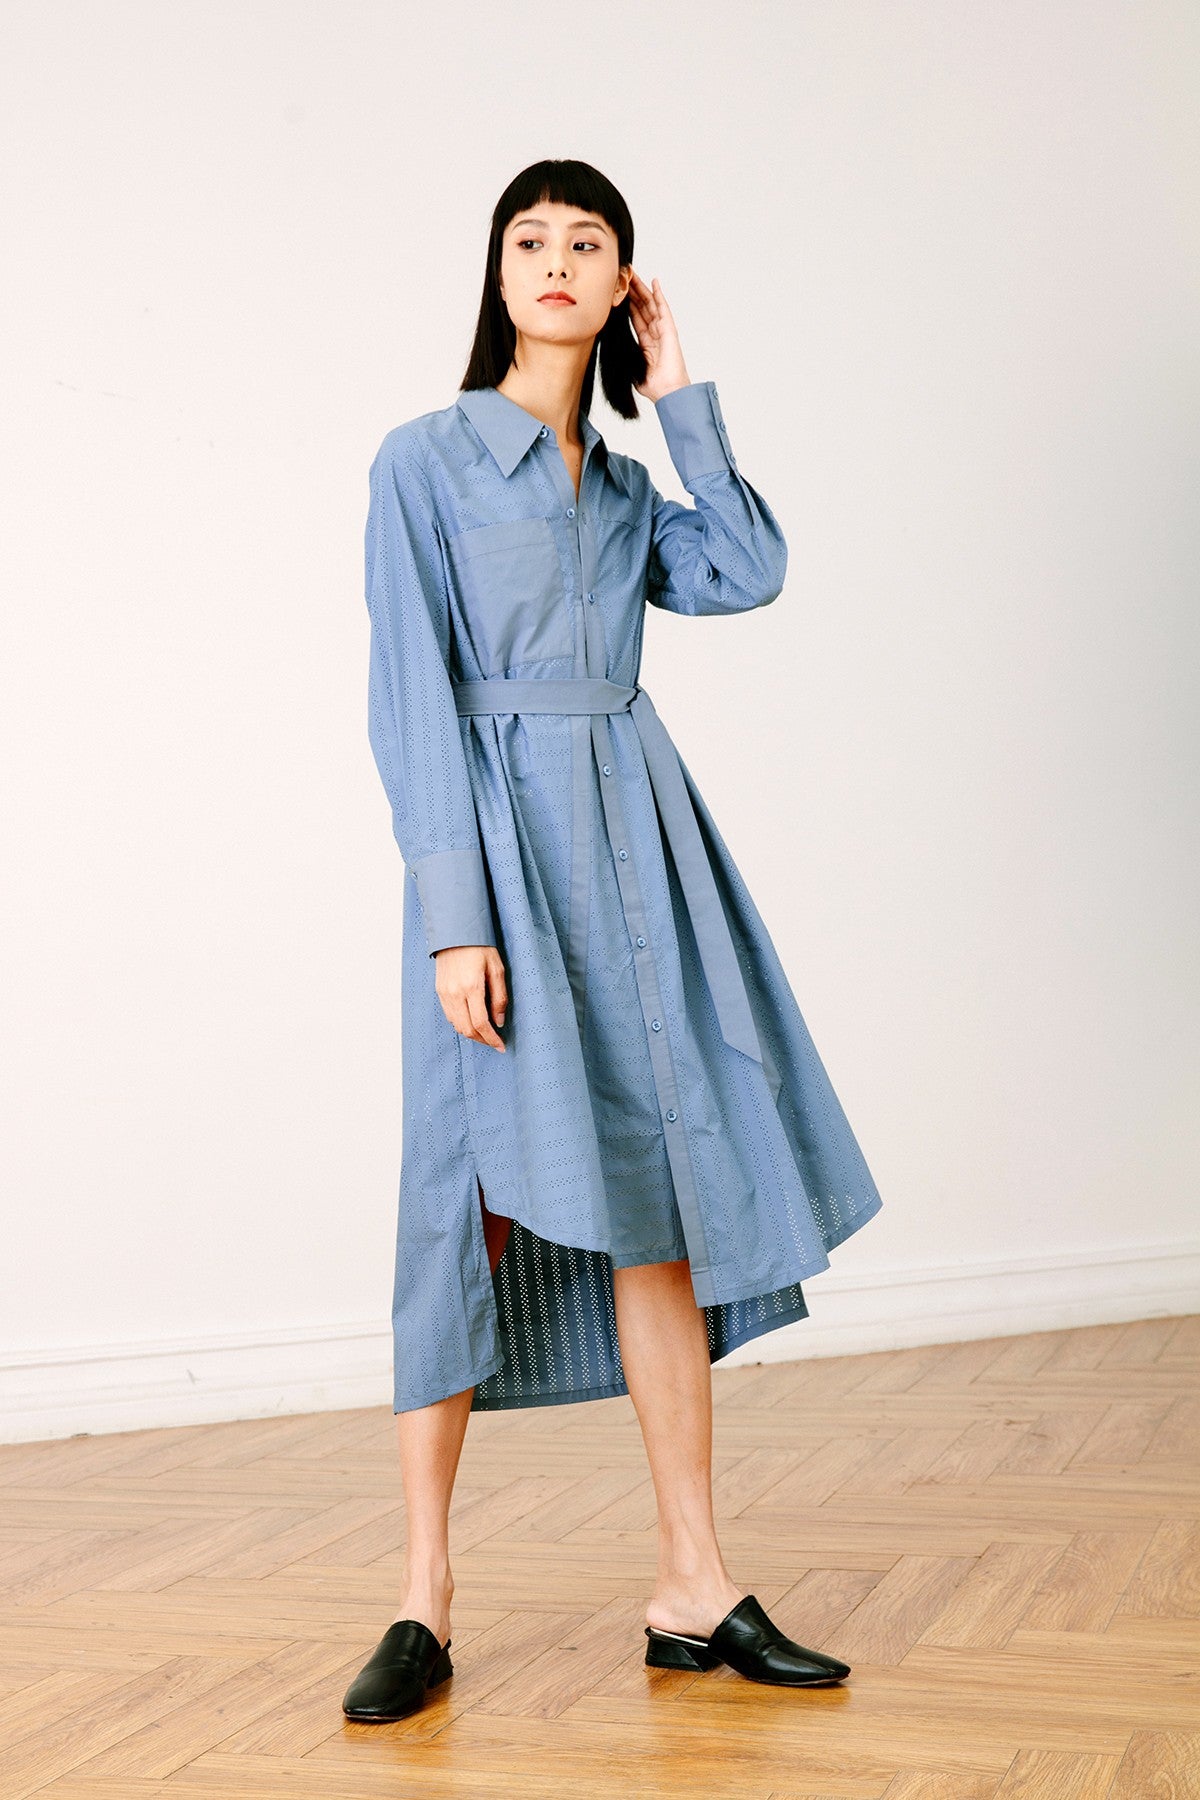 SKYE San Francisco SF California shop ethical sustainable modern chic minimalist luxury clothing women fashion Olivia Shirt Dress blue 1